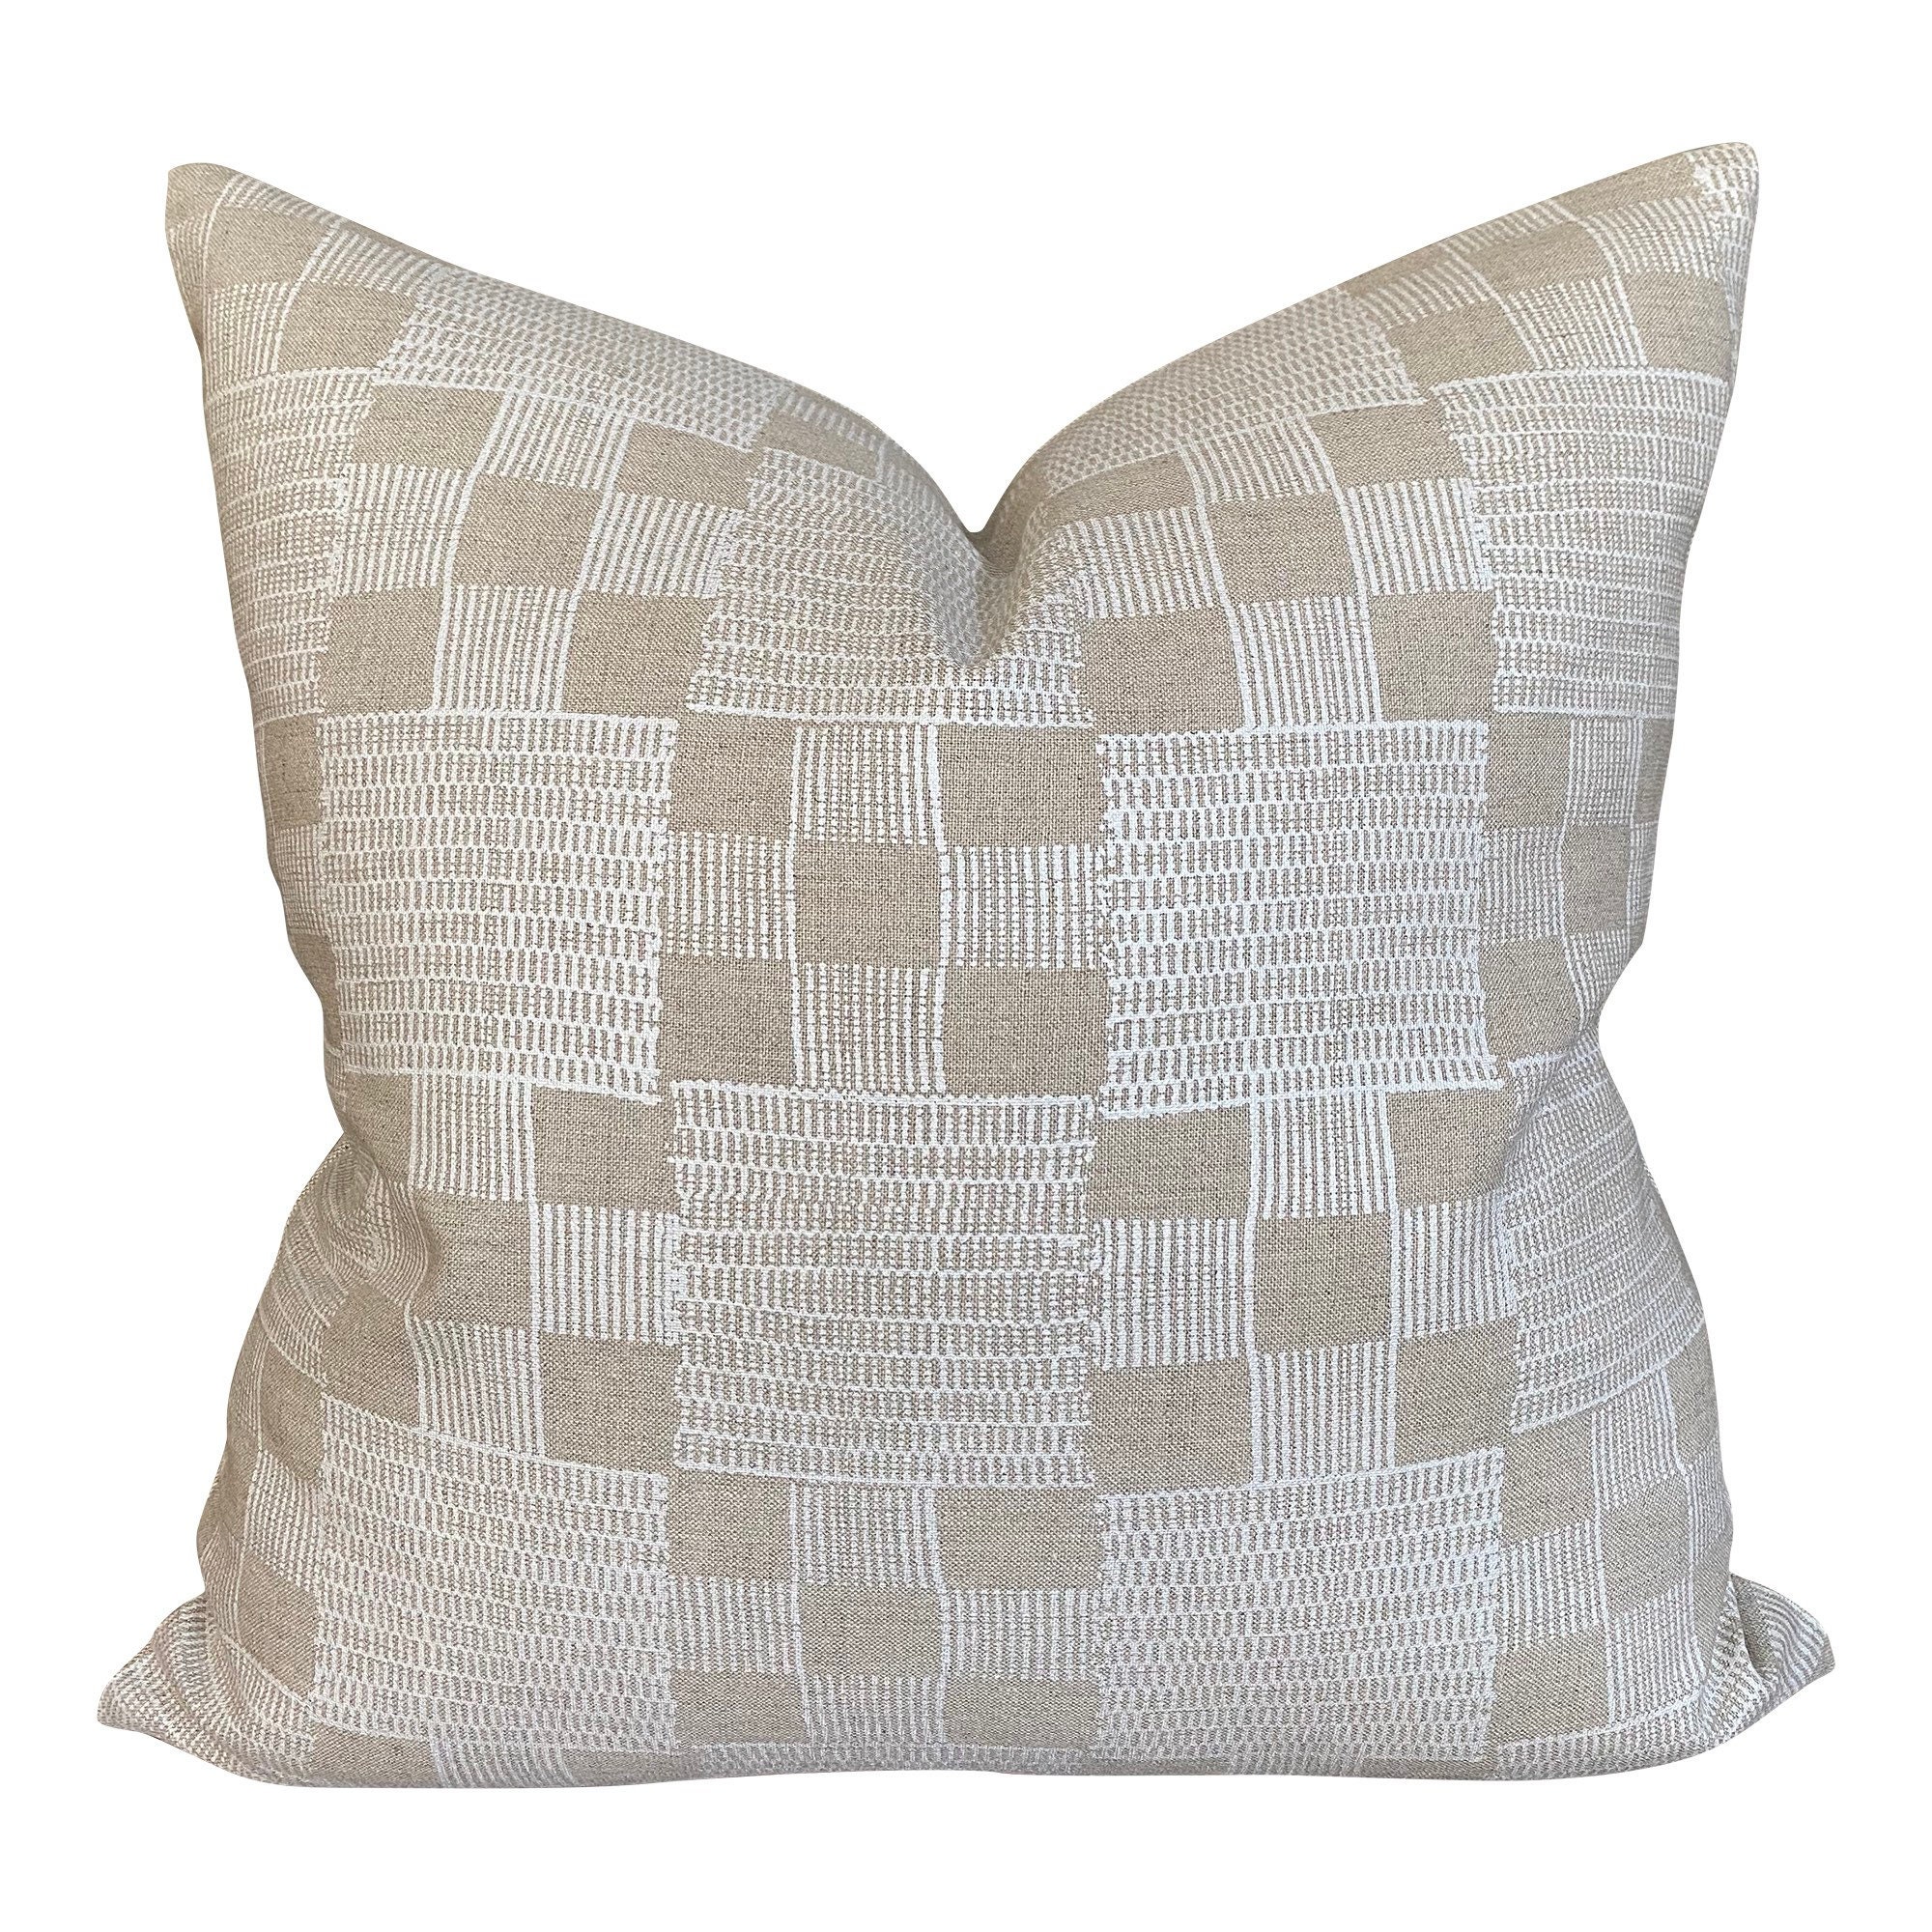 Louis Vuitton Decorative Pillows